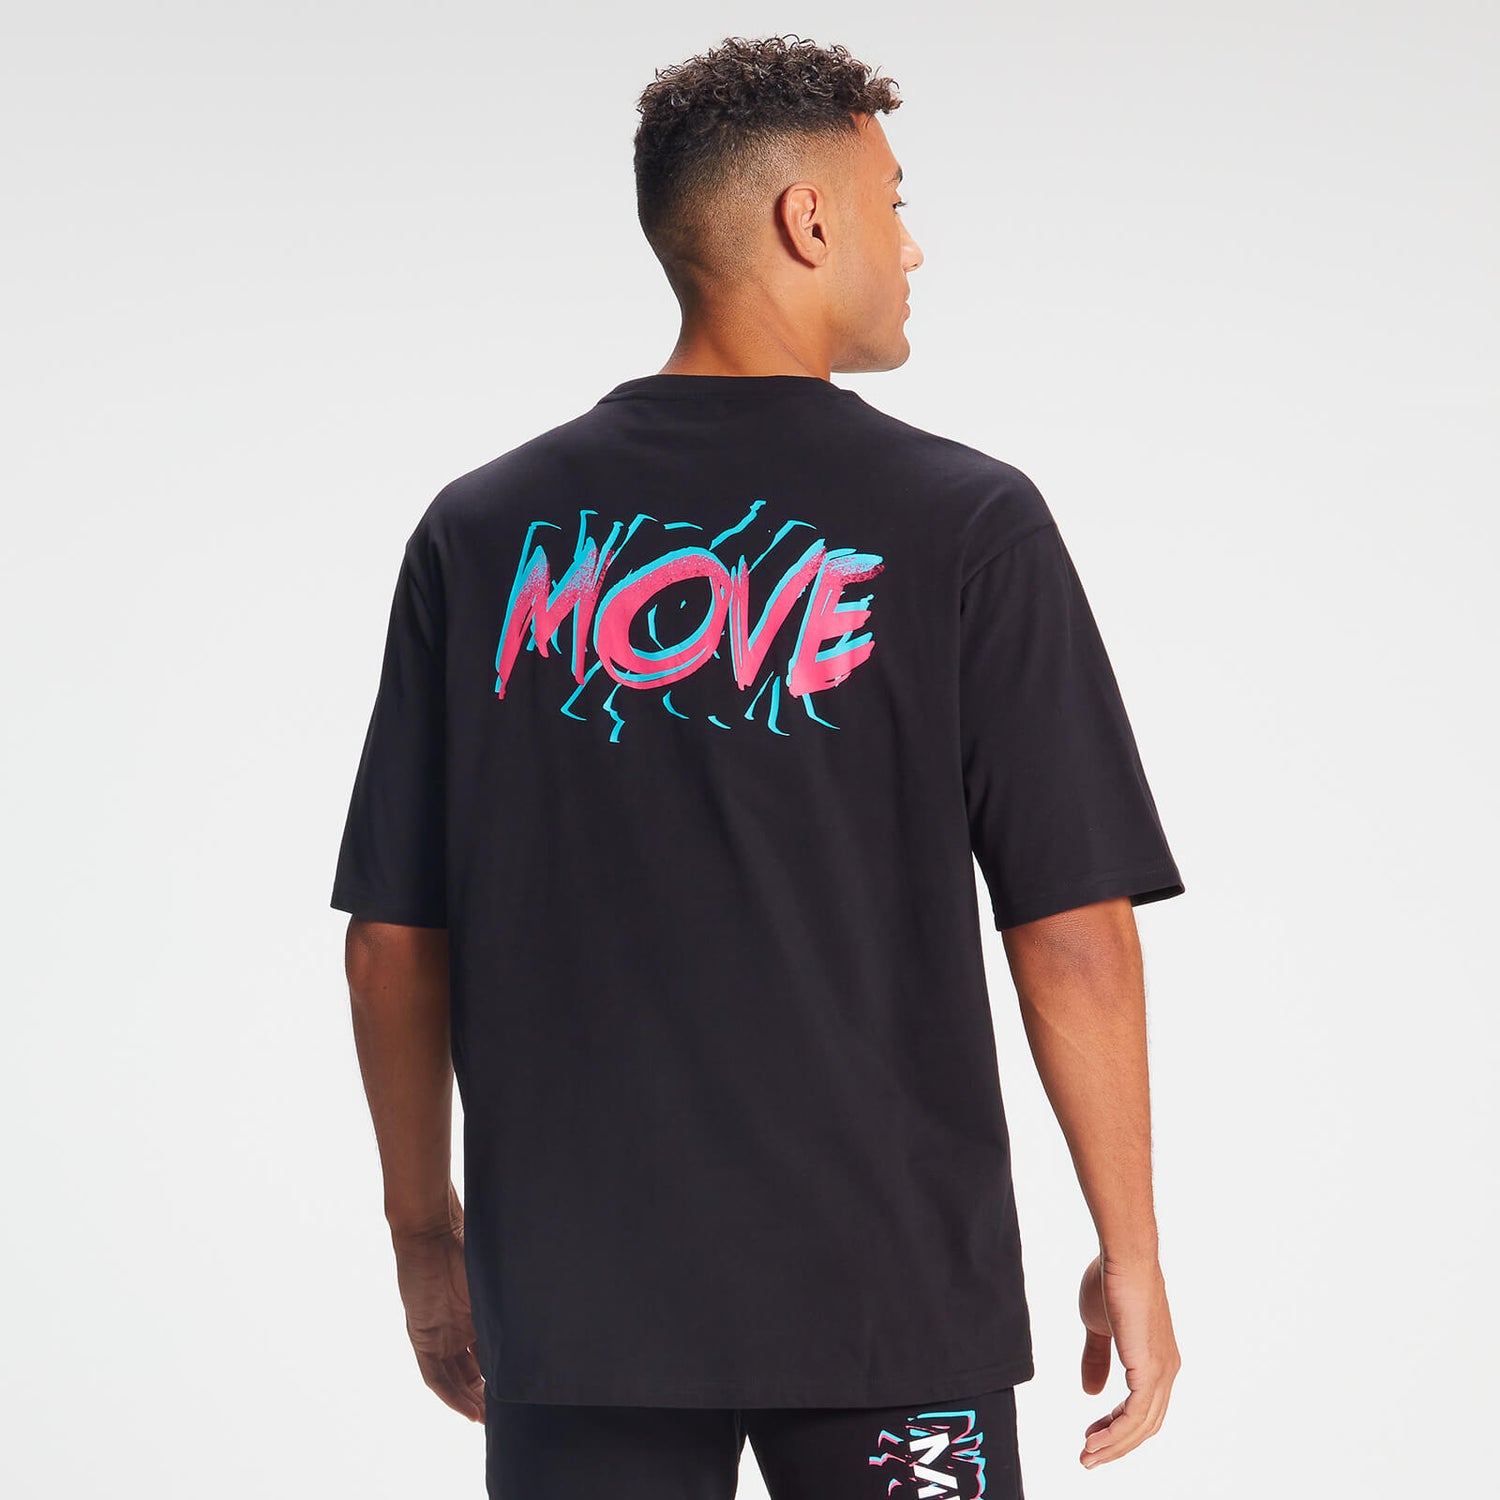 Camiseta extragrande Retro Move para hombre de MP - Negro